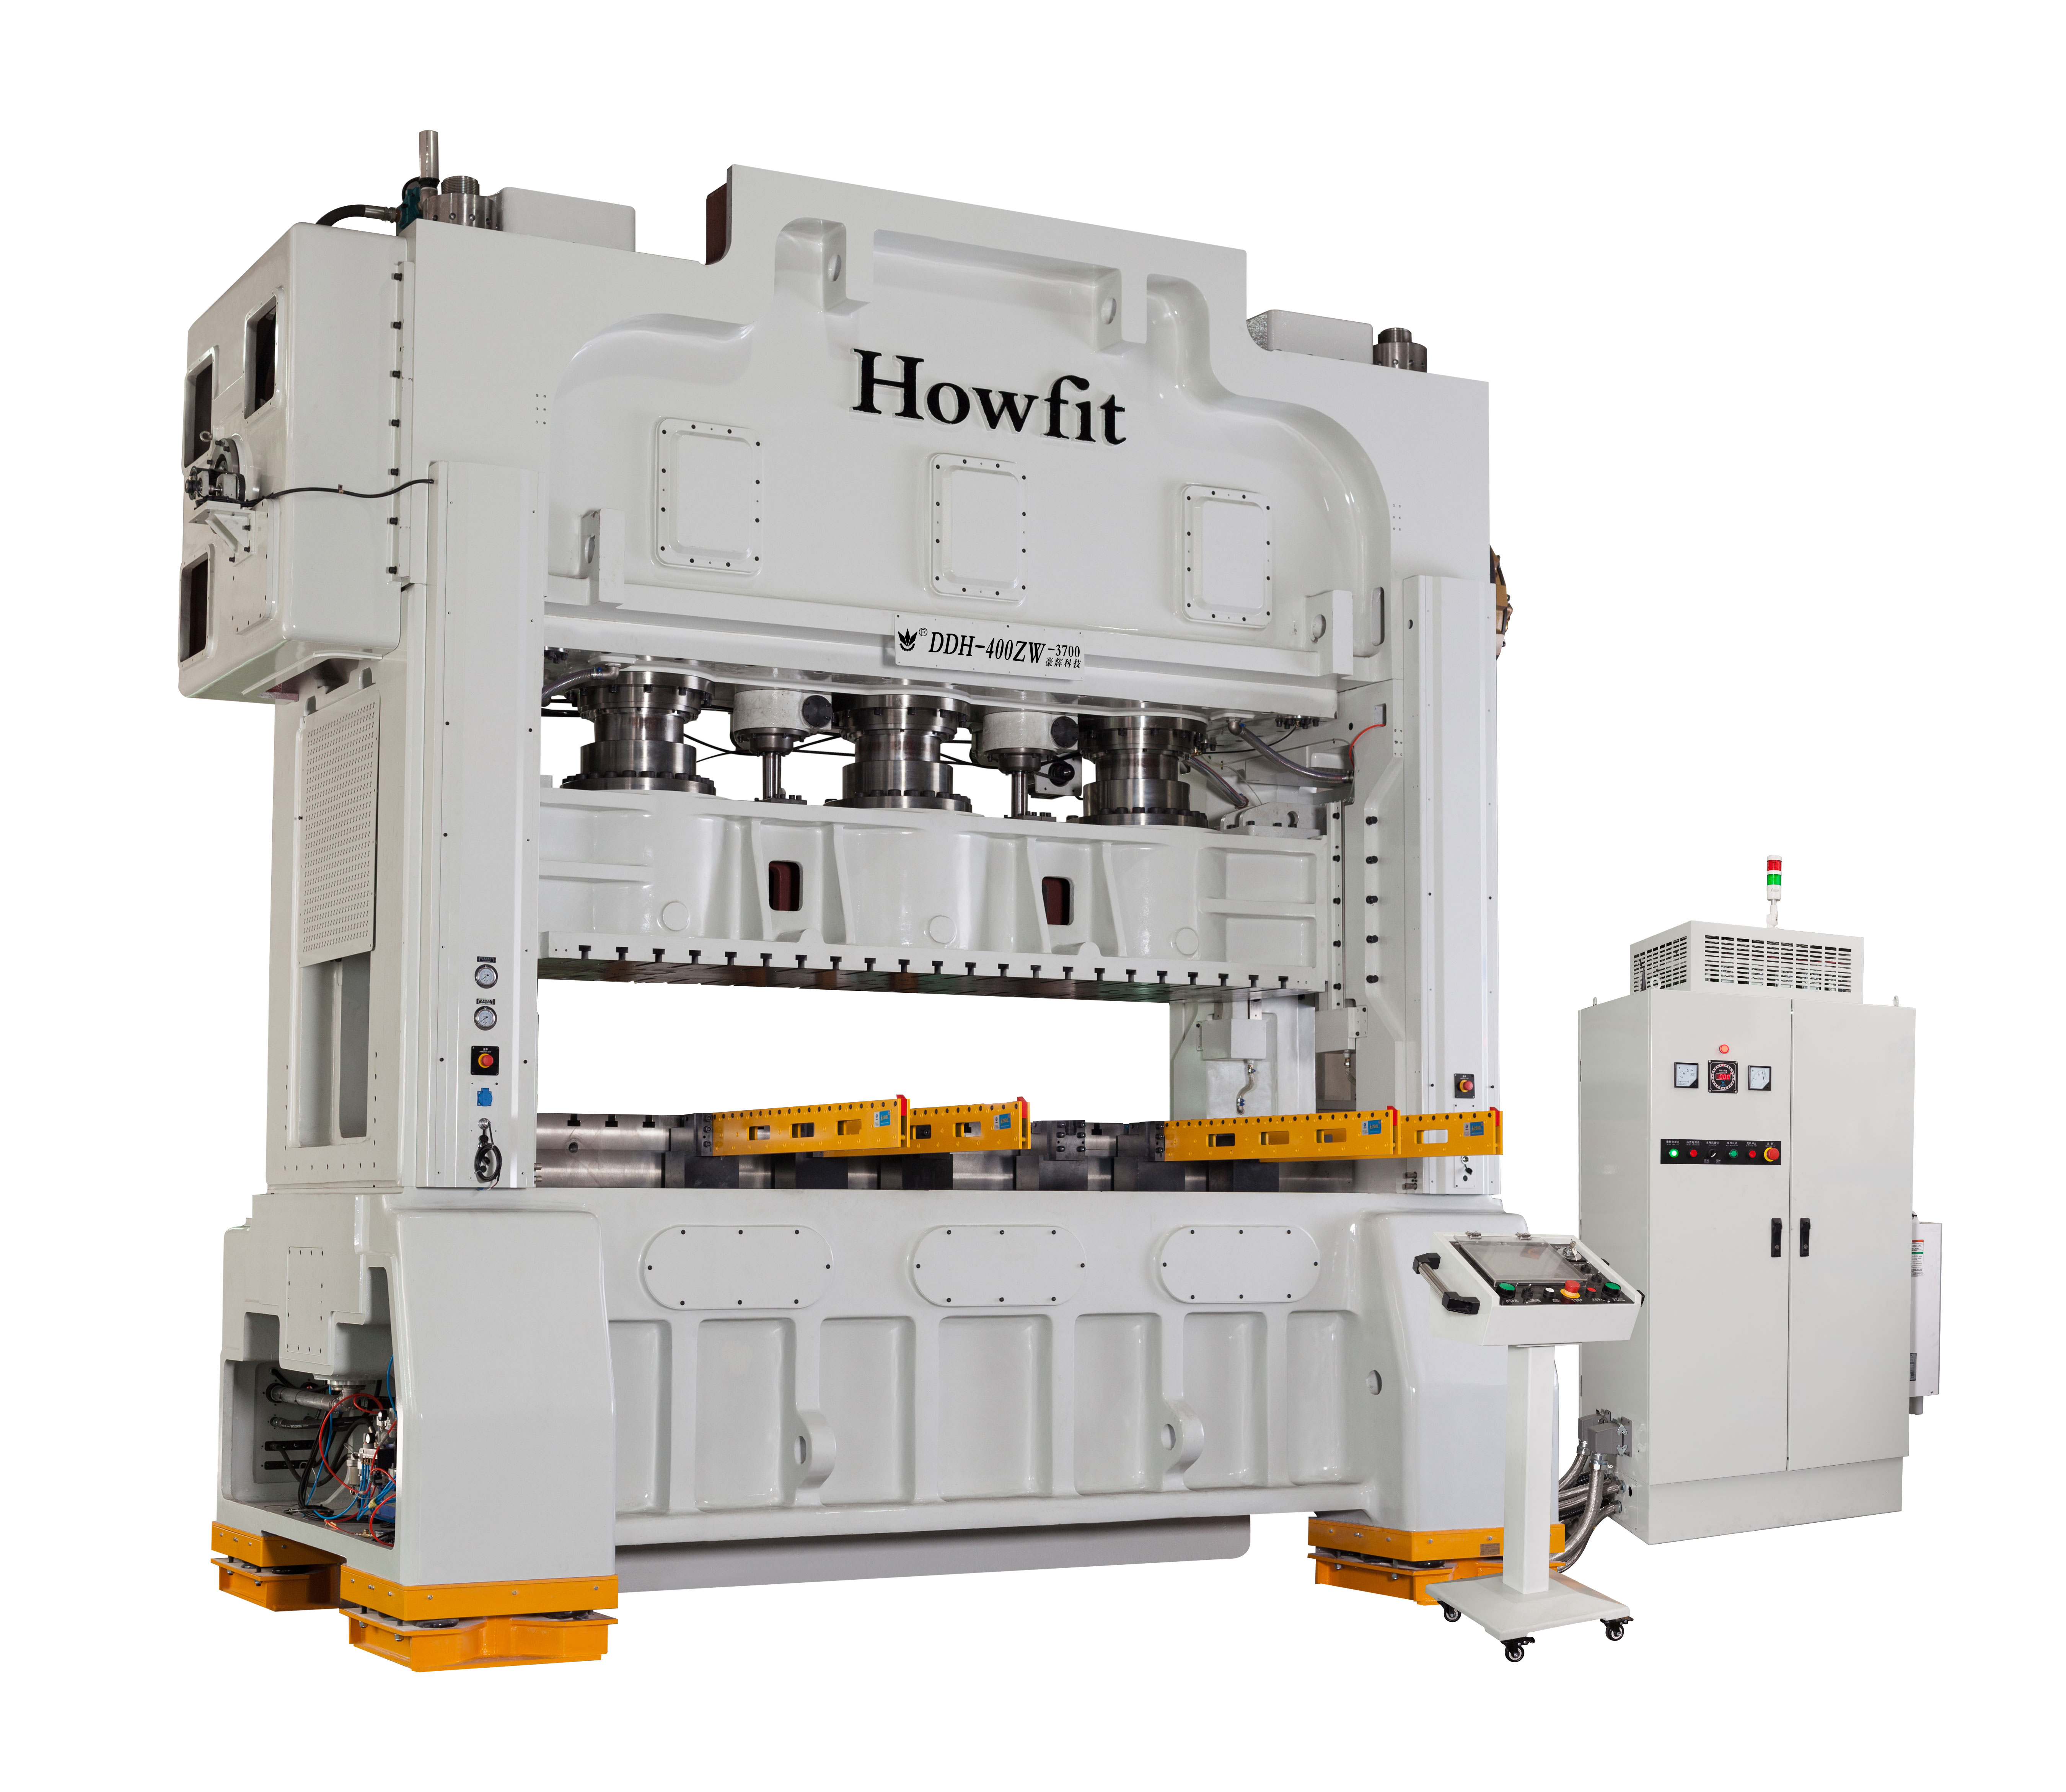 HOWFIT DDH 400T ZW-3700 zaručuje kvalitu výroby